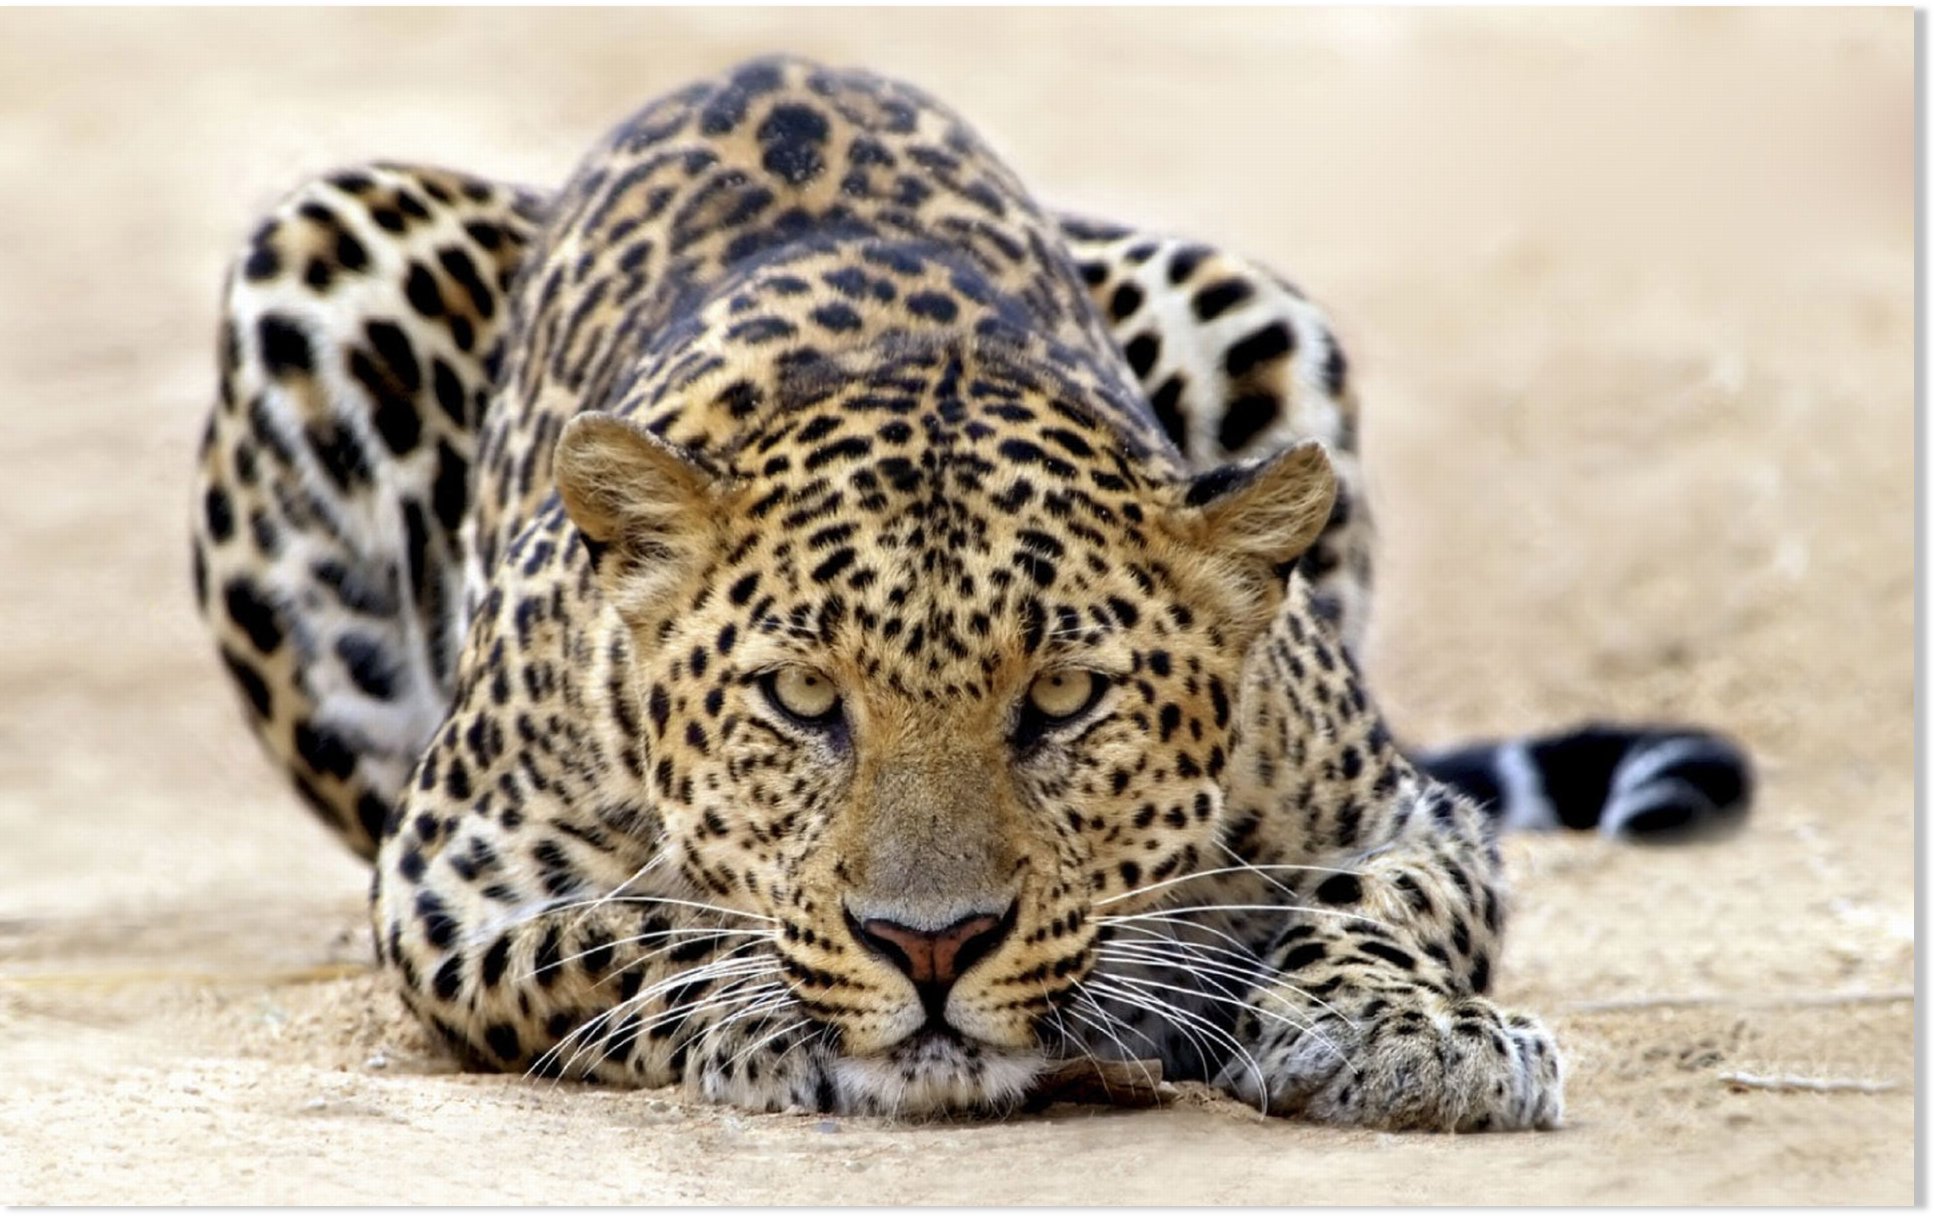 Leopard kills, eats 2 children in 6 hours in Madhya Pradesh, India ...